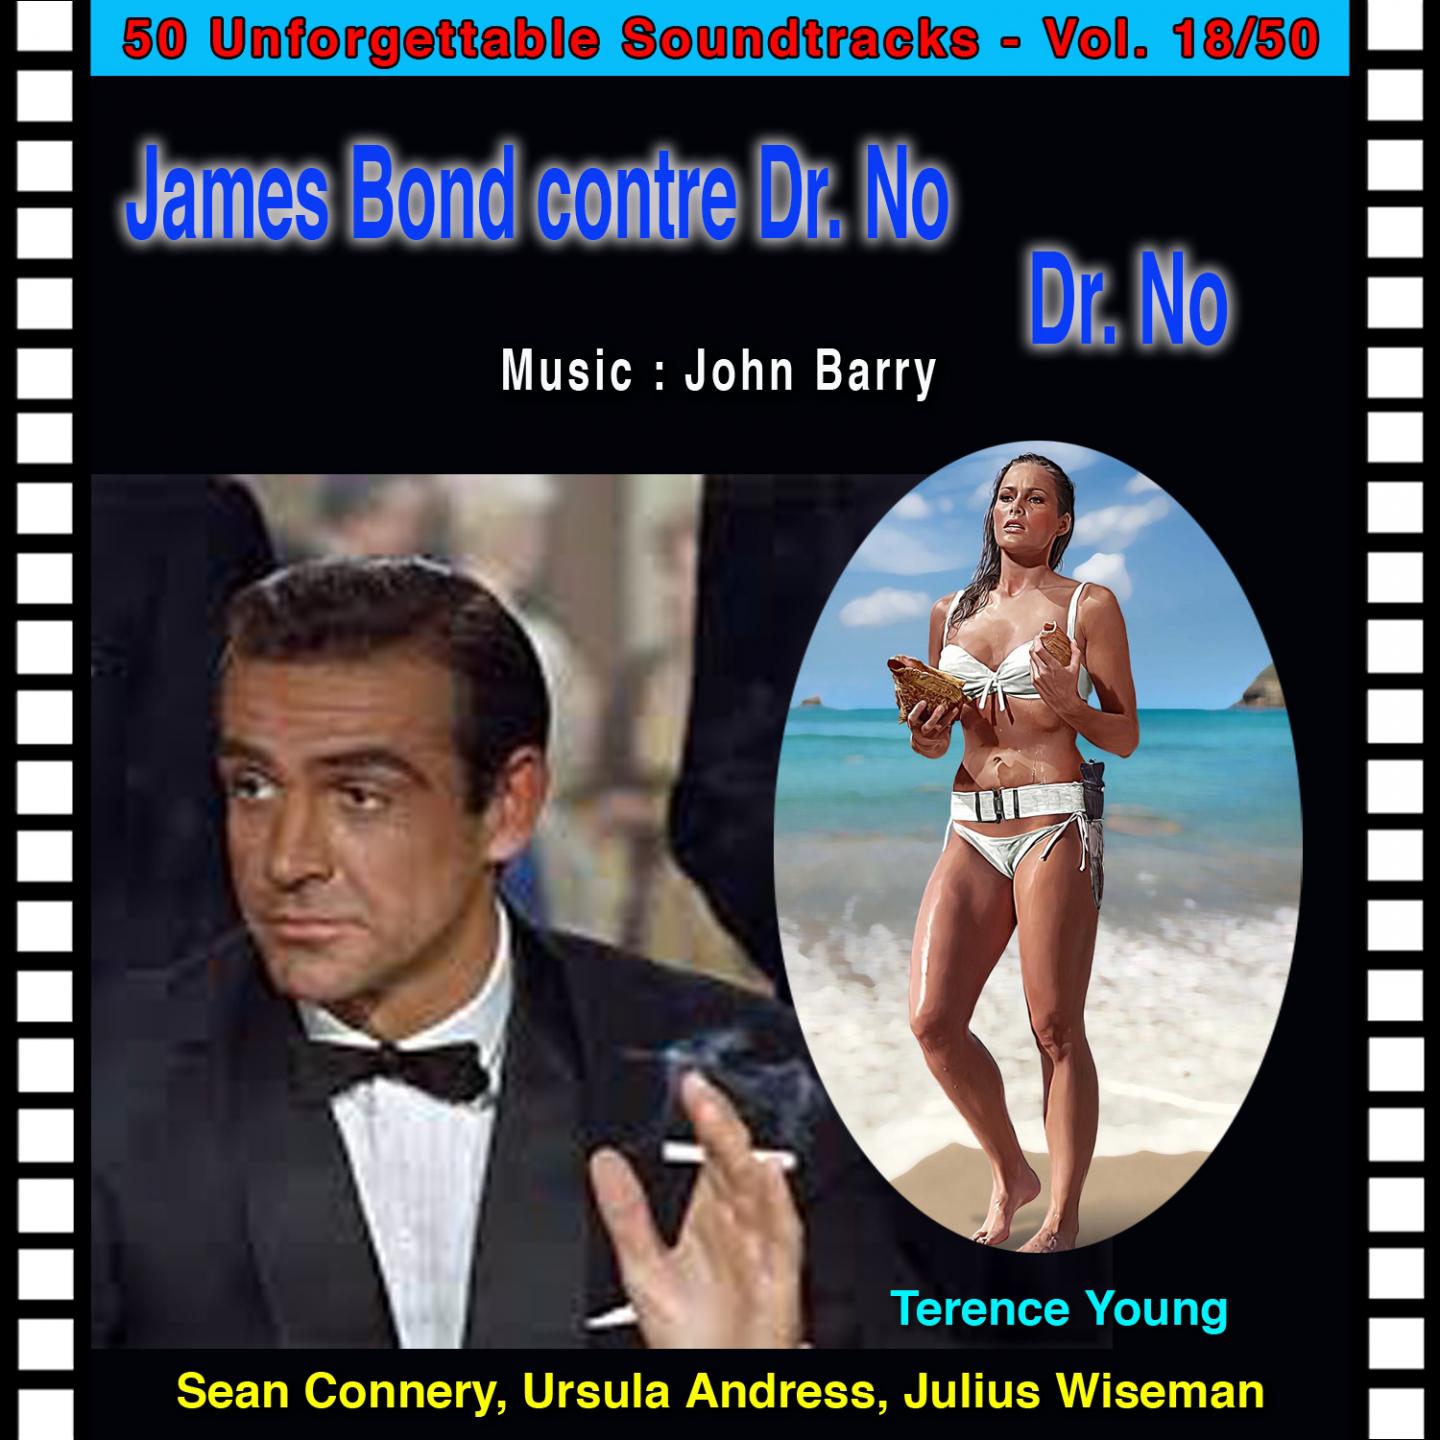 50 Unforgettable Soundtracks, Vol. 18/50